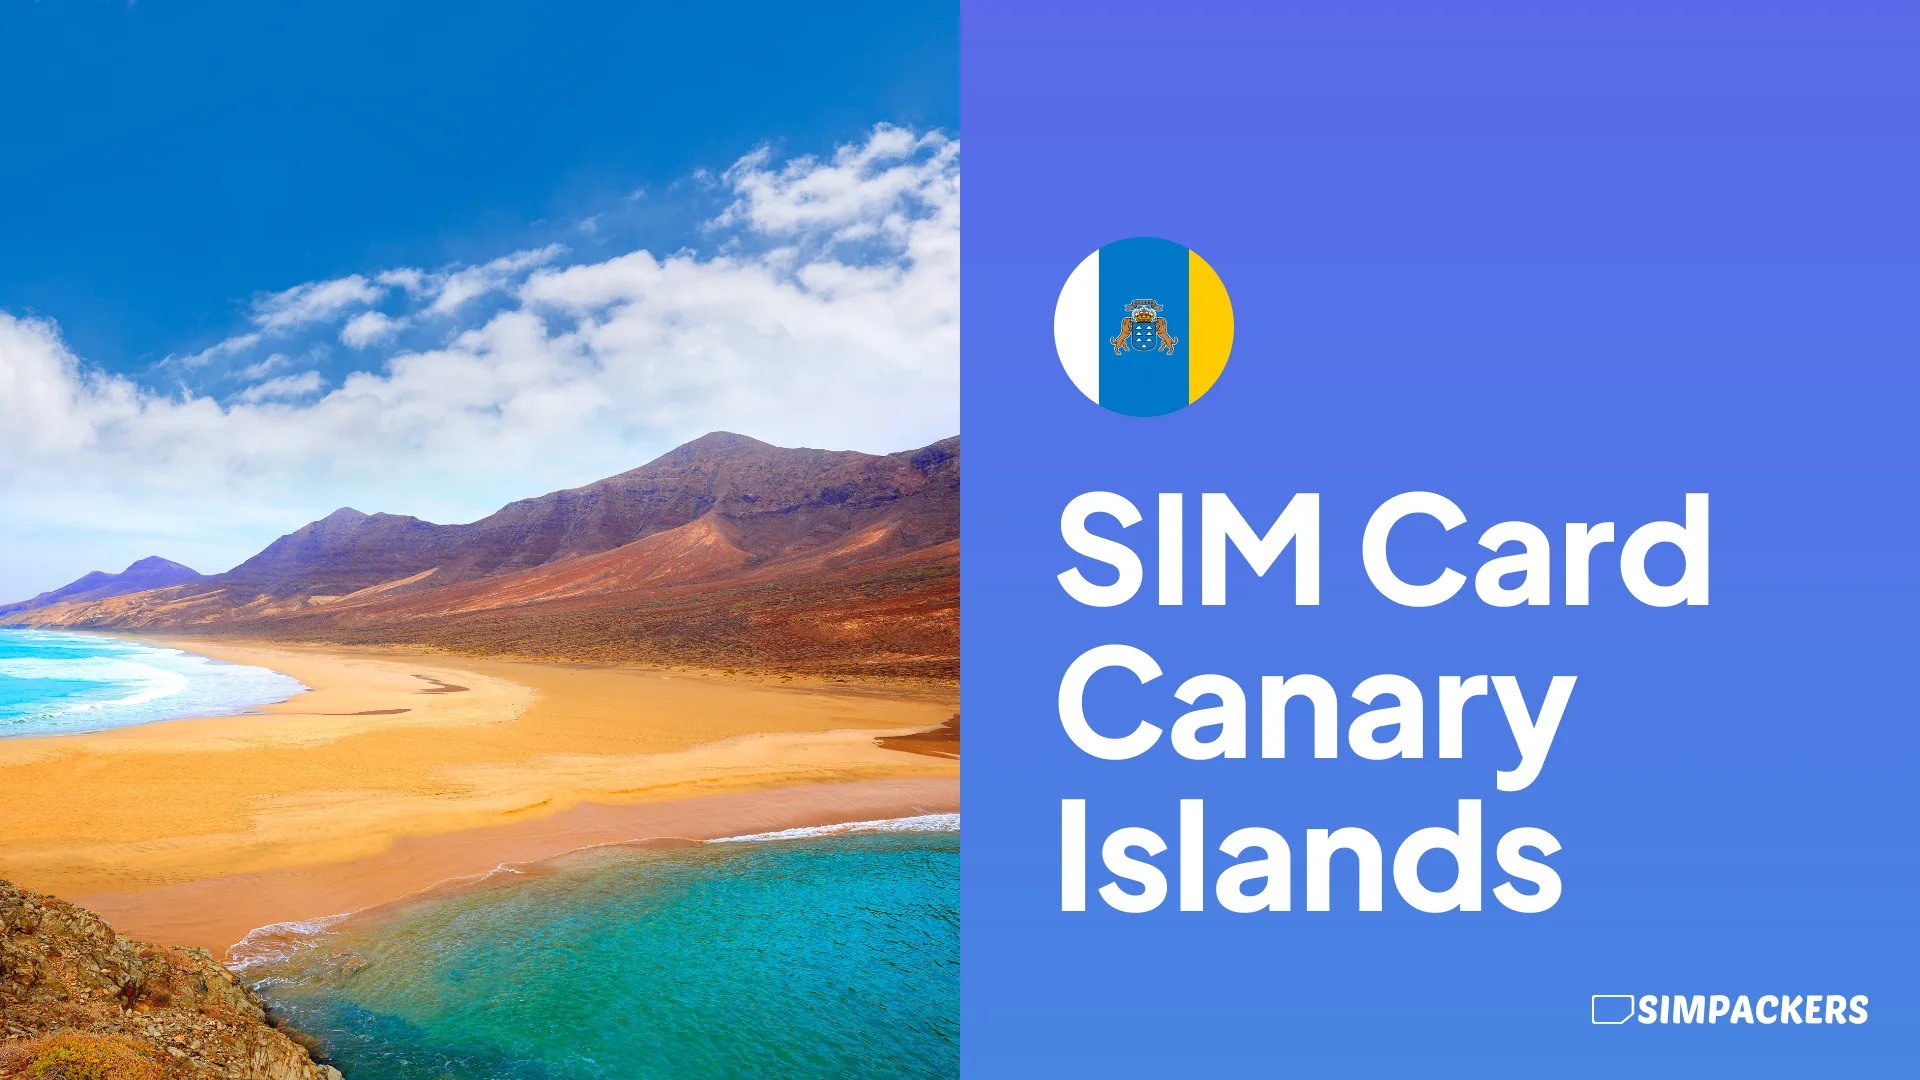 EN/FEATURED_IMAGES/sim-card-canary-islands.webp